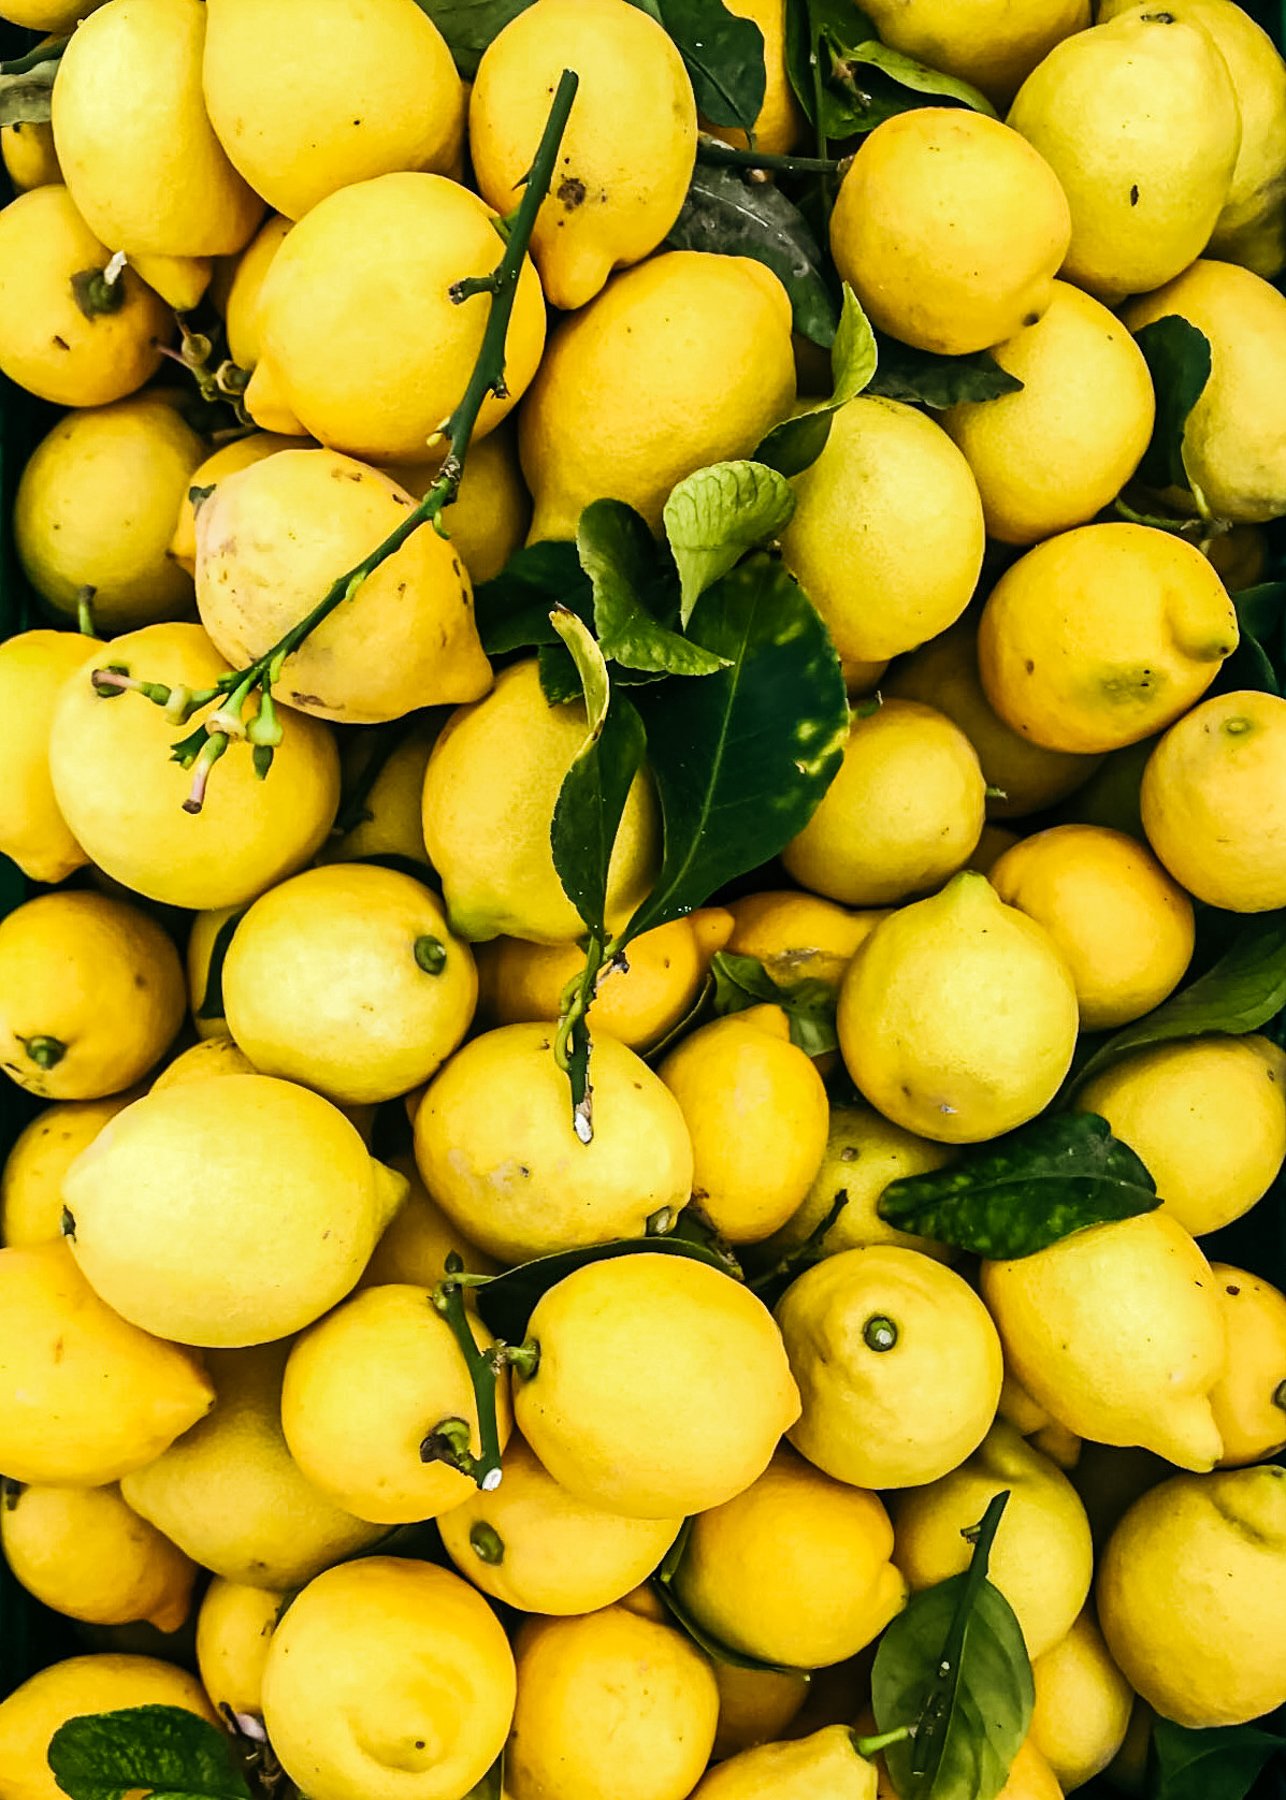 Lemons at the Farmers Market